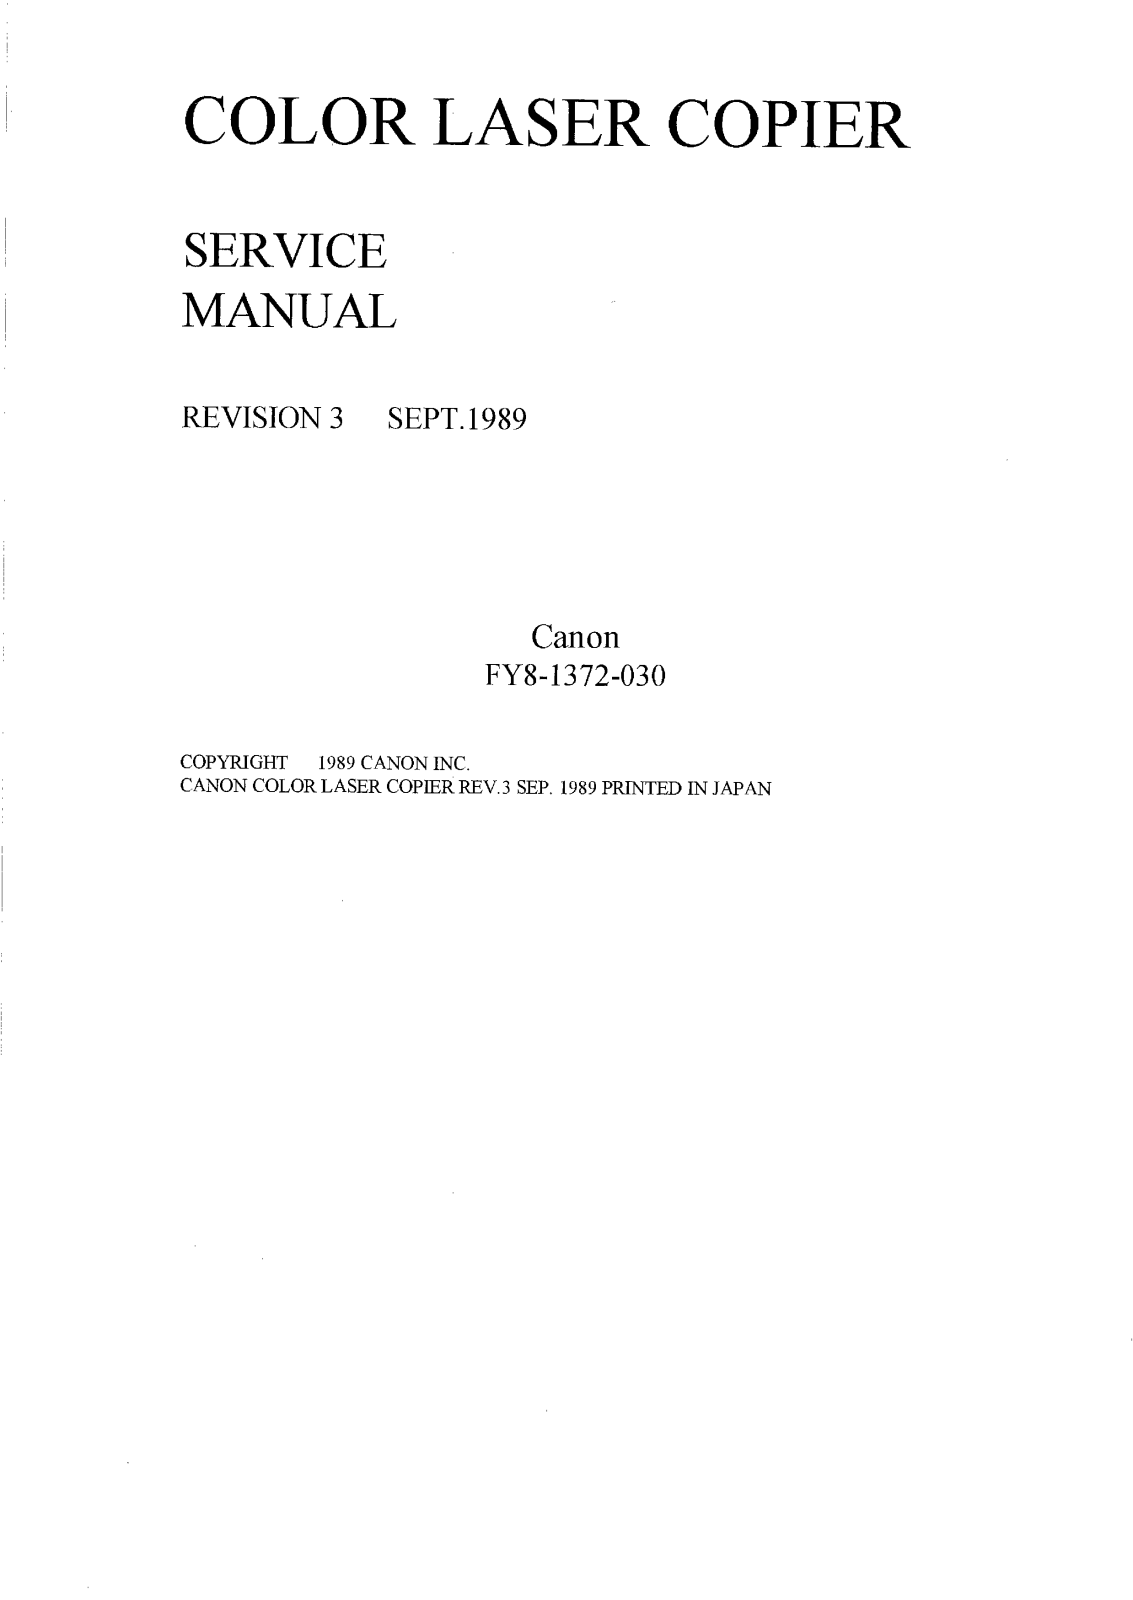 CANON Color Scanner-Printer-Copier Service Manual